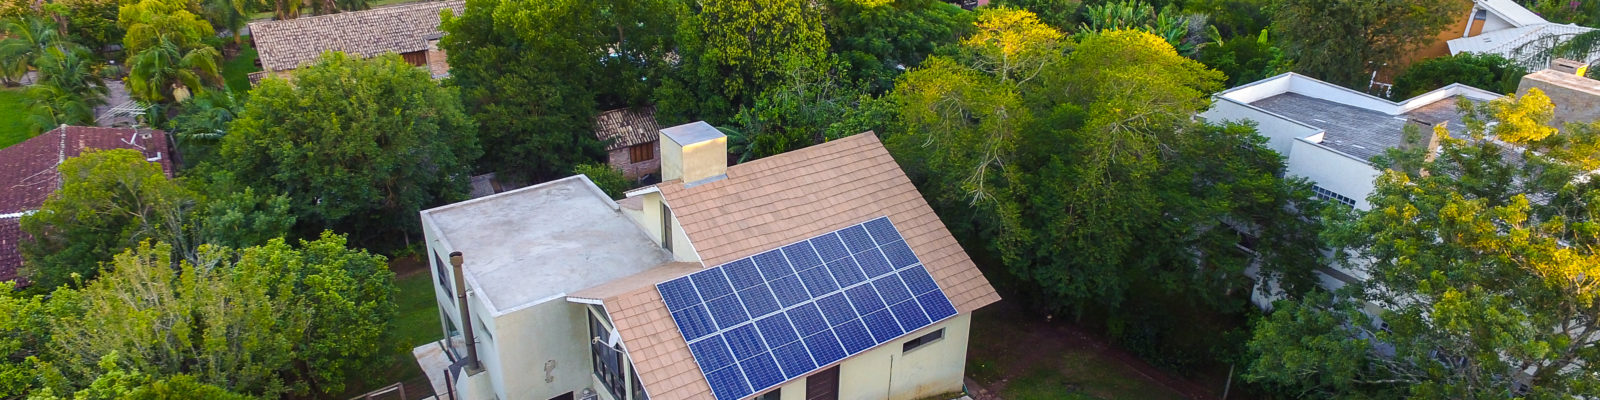 Energia solar fotovoltaica em Gravataí - Elysia sistema fotovoltaico RS